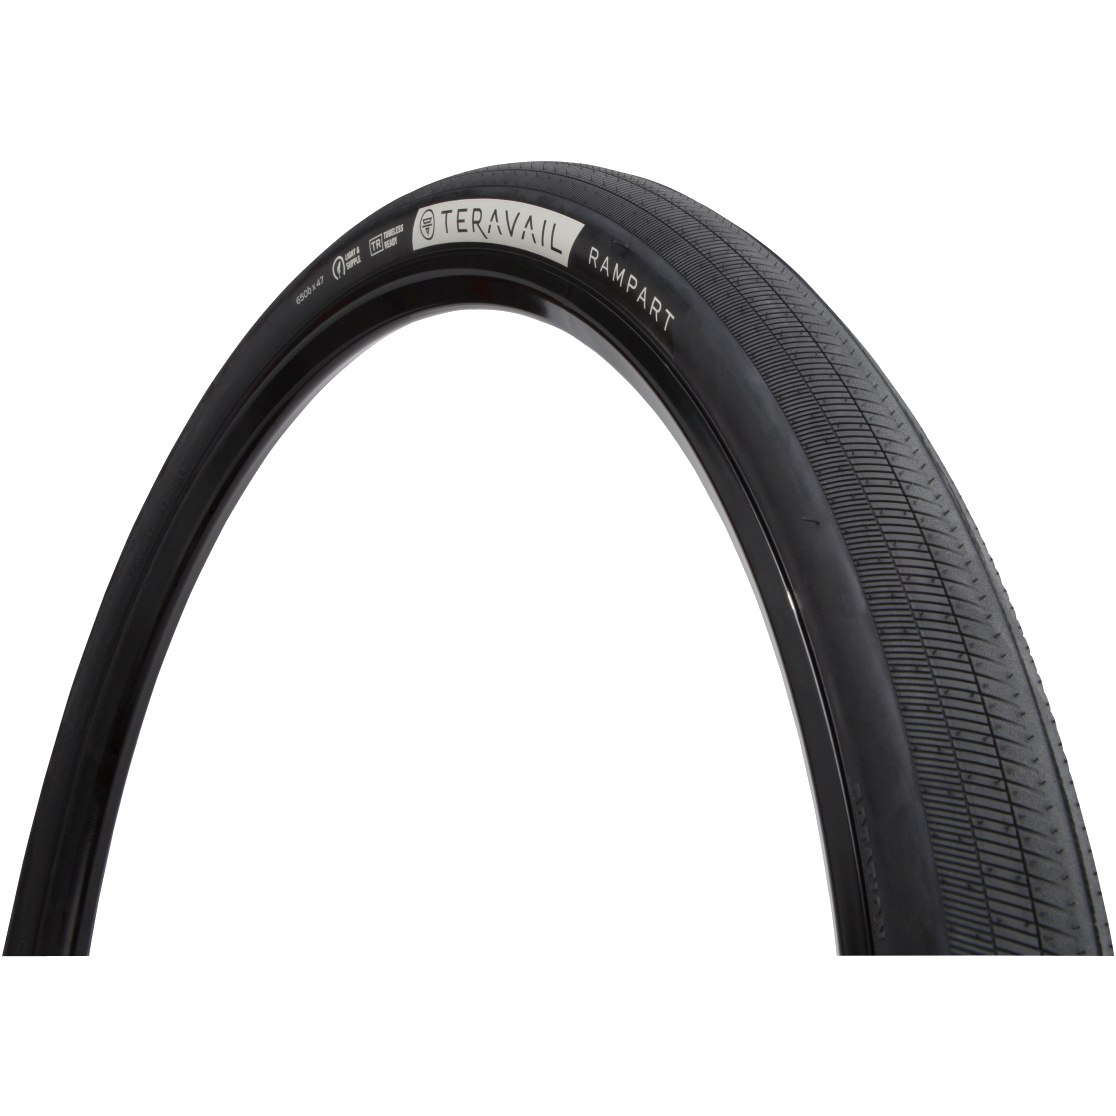 Productfoto van Teravail Rampart Folding Tire - Light and Supple - 47-584 - black